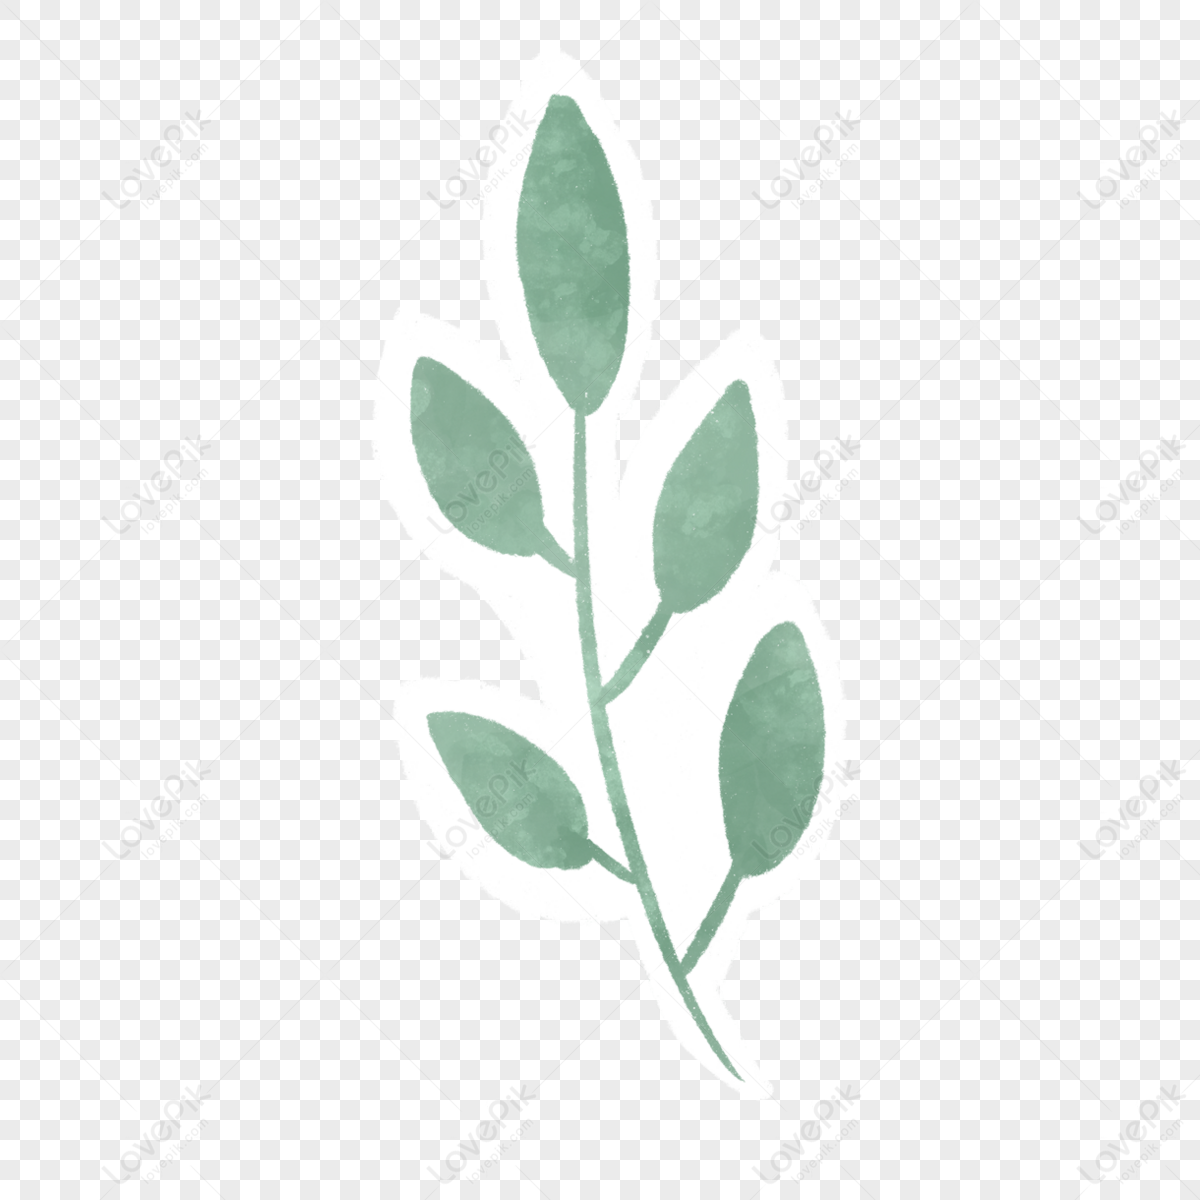 Leaf Doodle PNG Images With Transparent Background | Free Download On ...